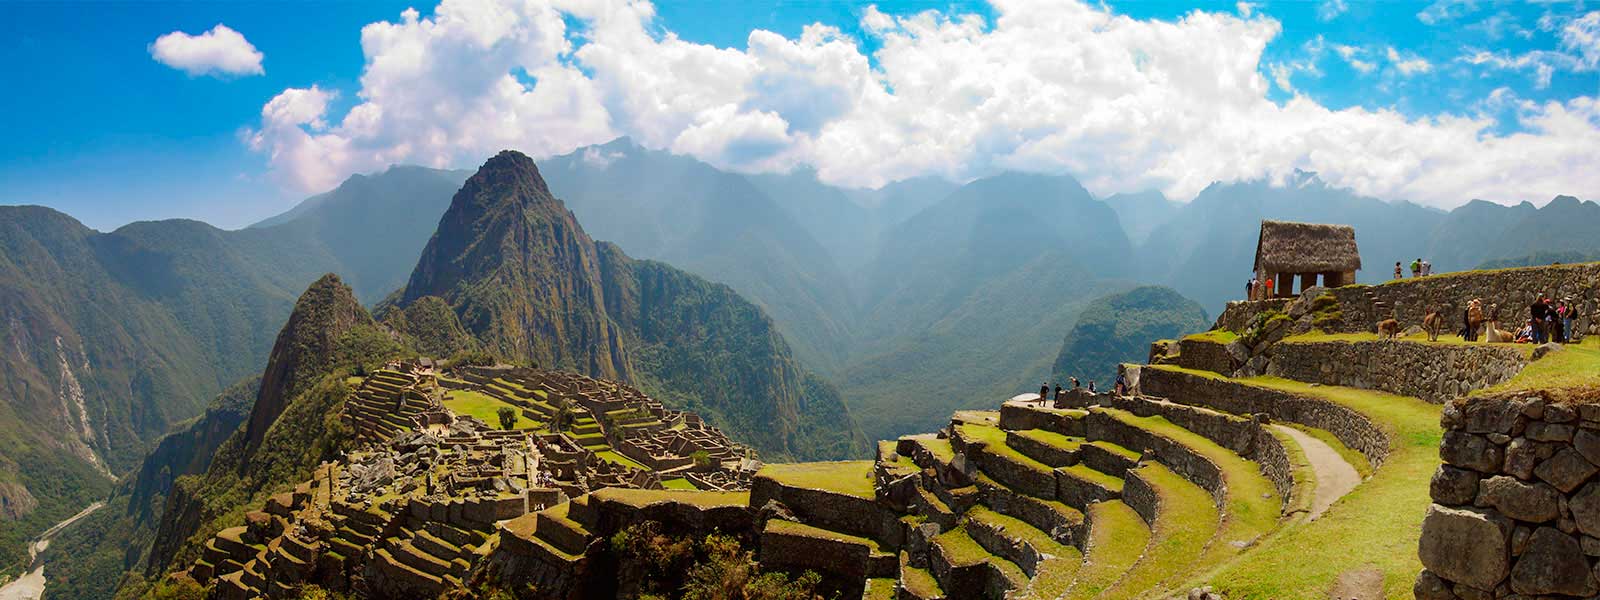 Machu Picchu amazing landscape